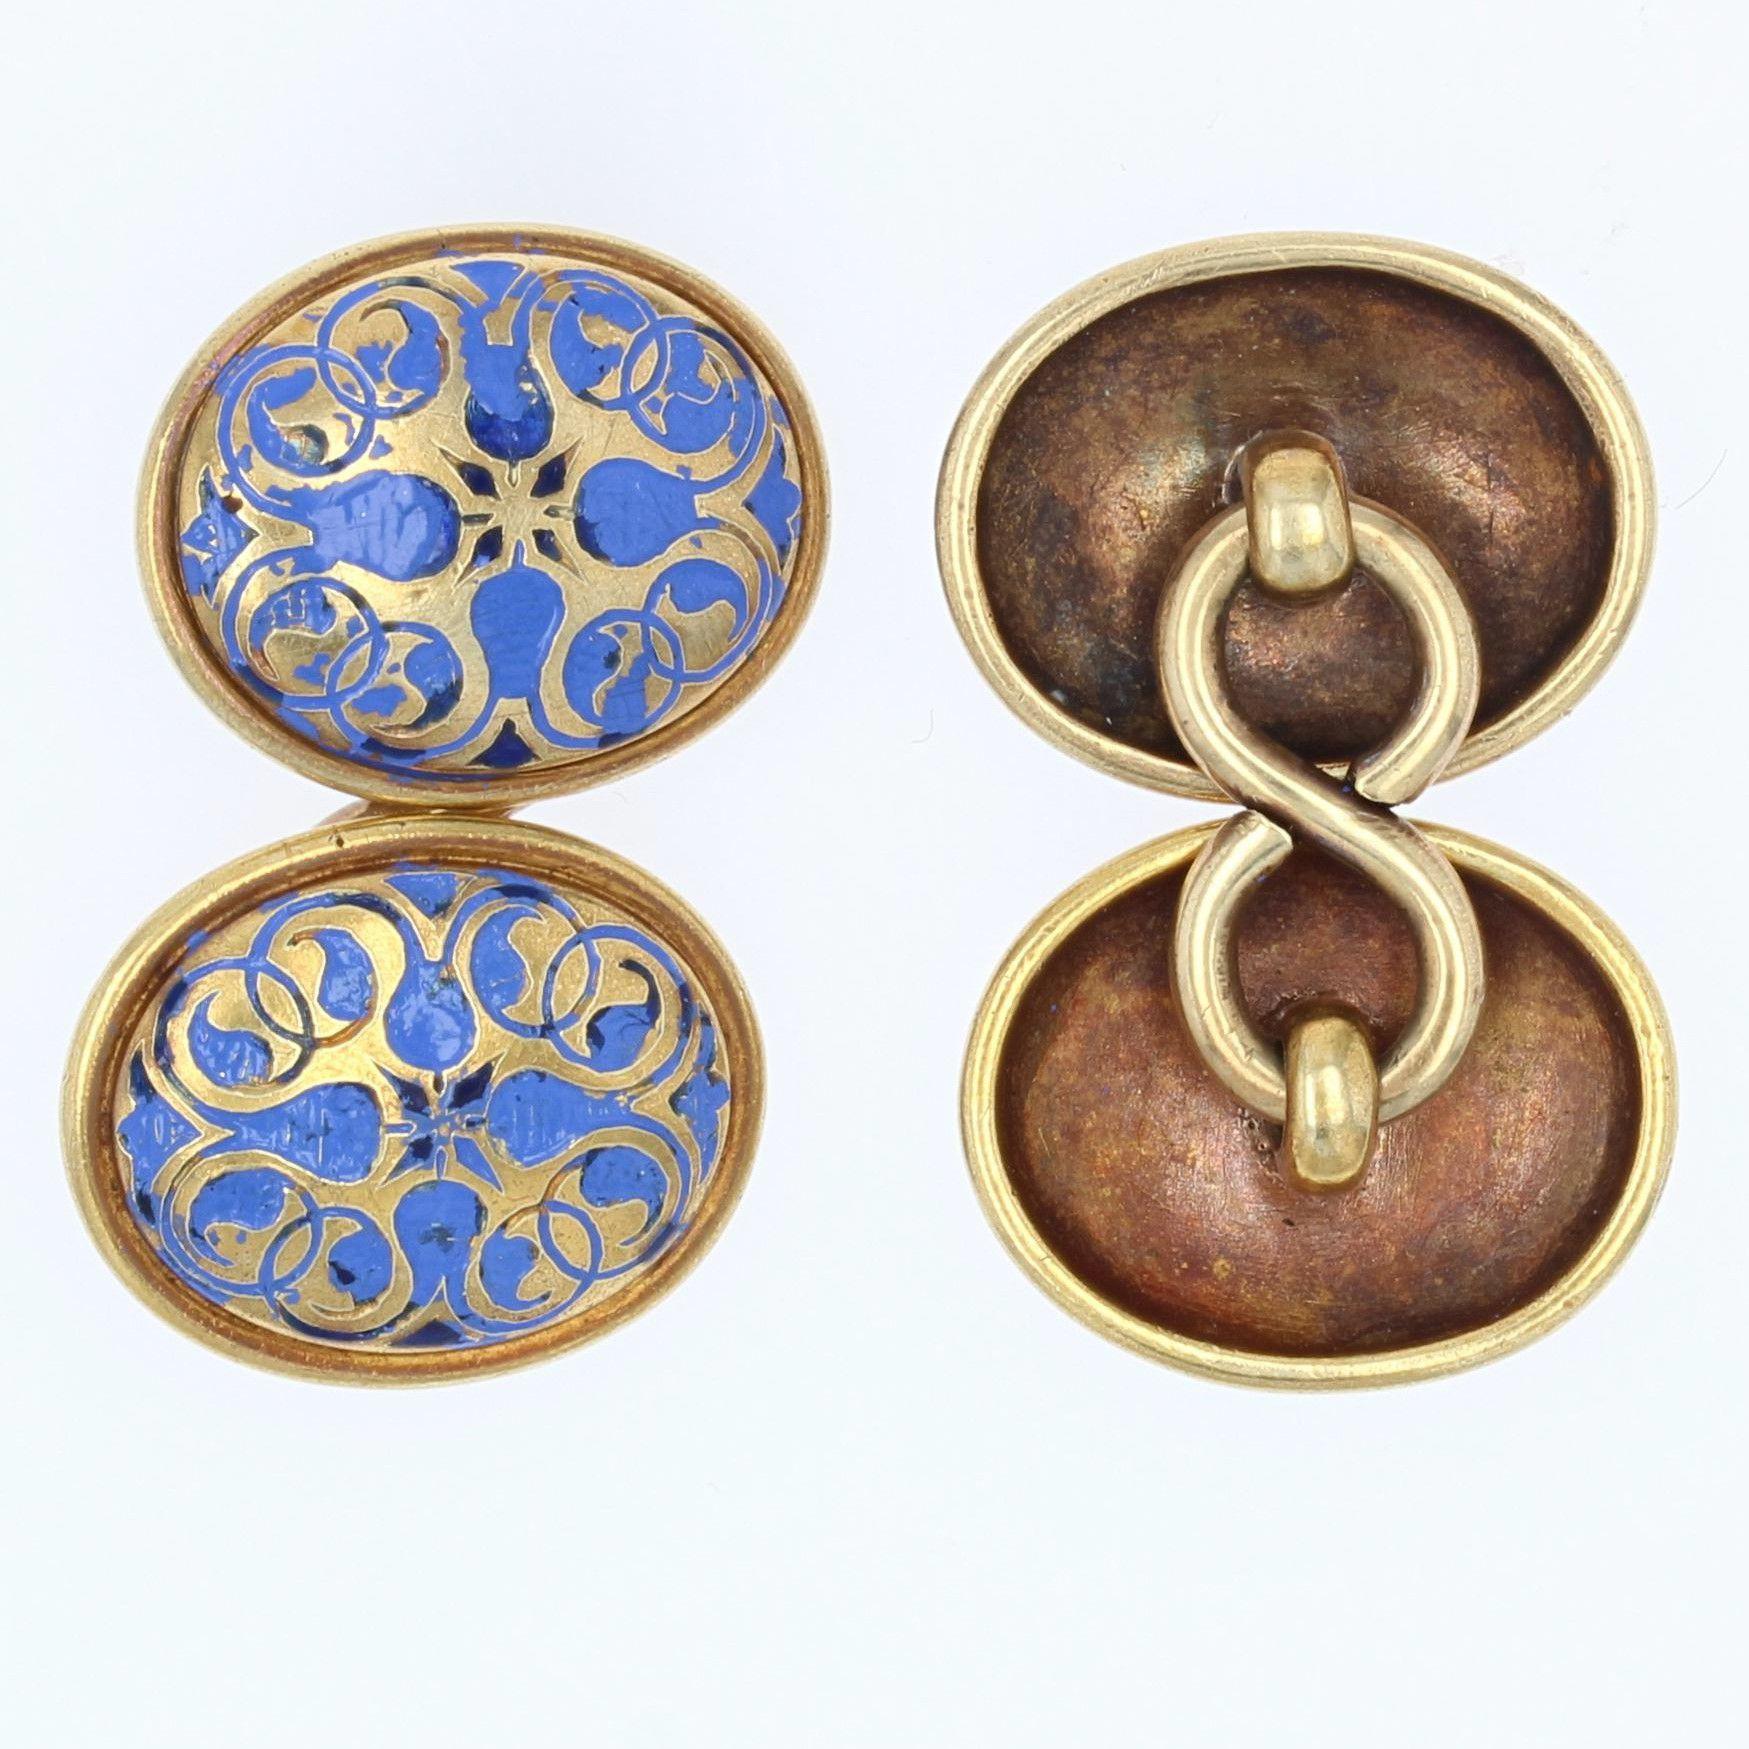 18th century cufflinks